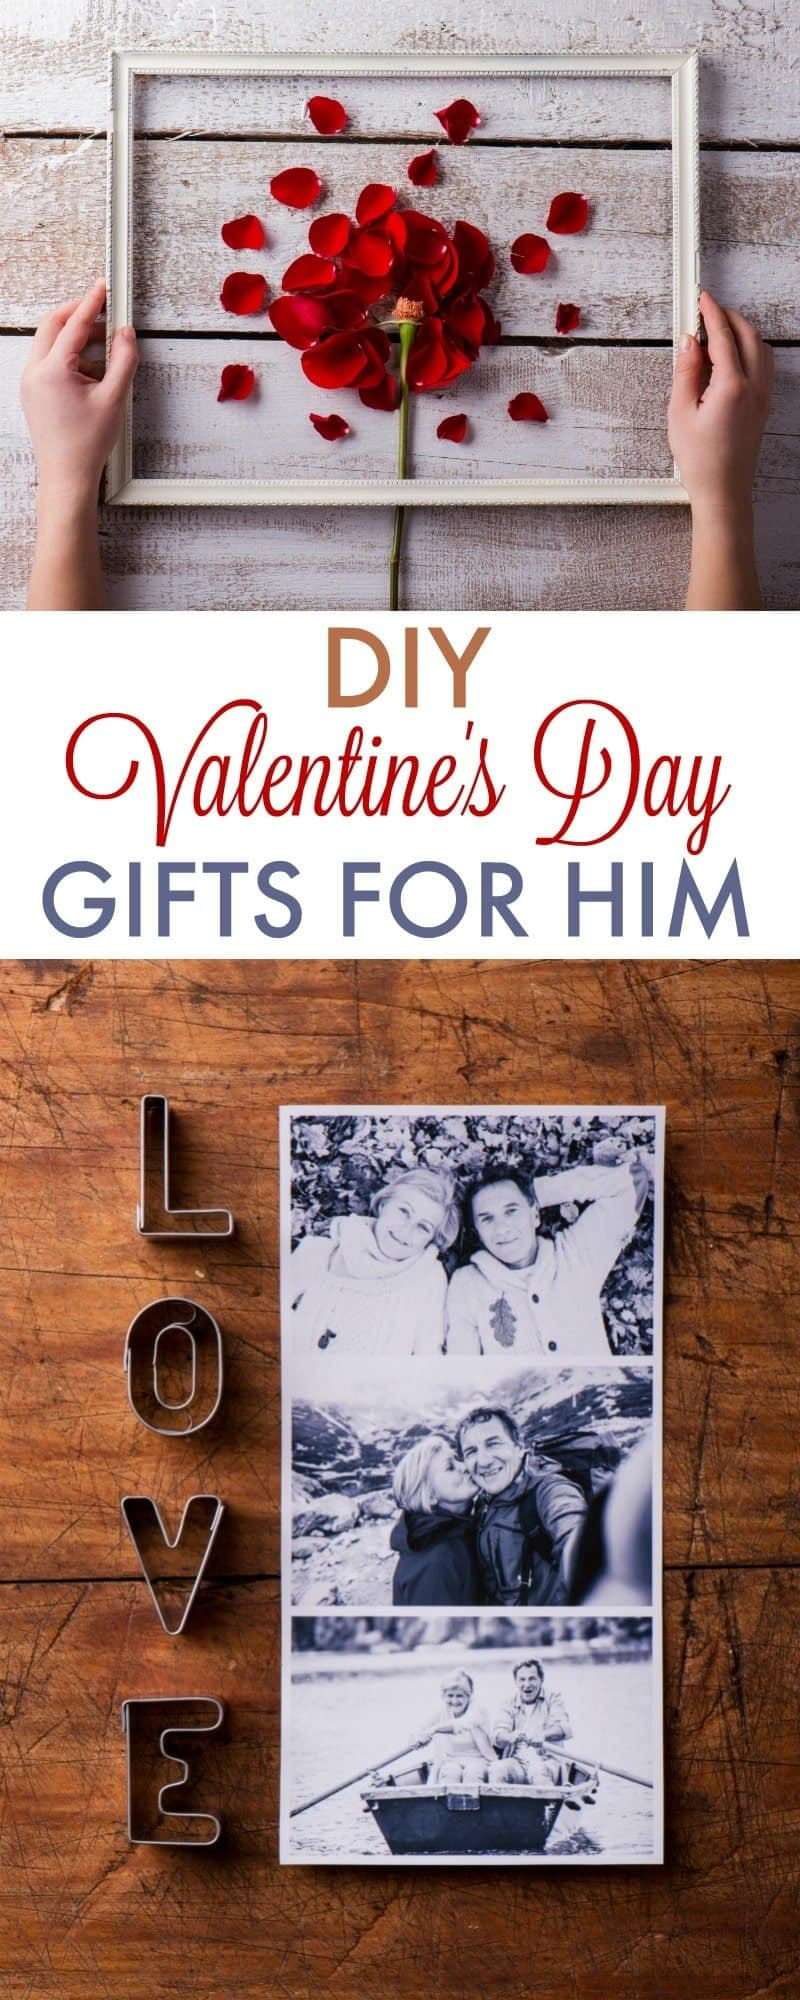 Cute Sentimental Gift Ideas For Boyfriend
 Top 25 Cute Sentimental Gift Ideas for Boyfriend – Home